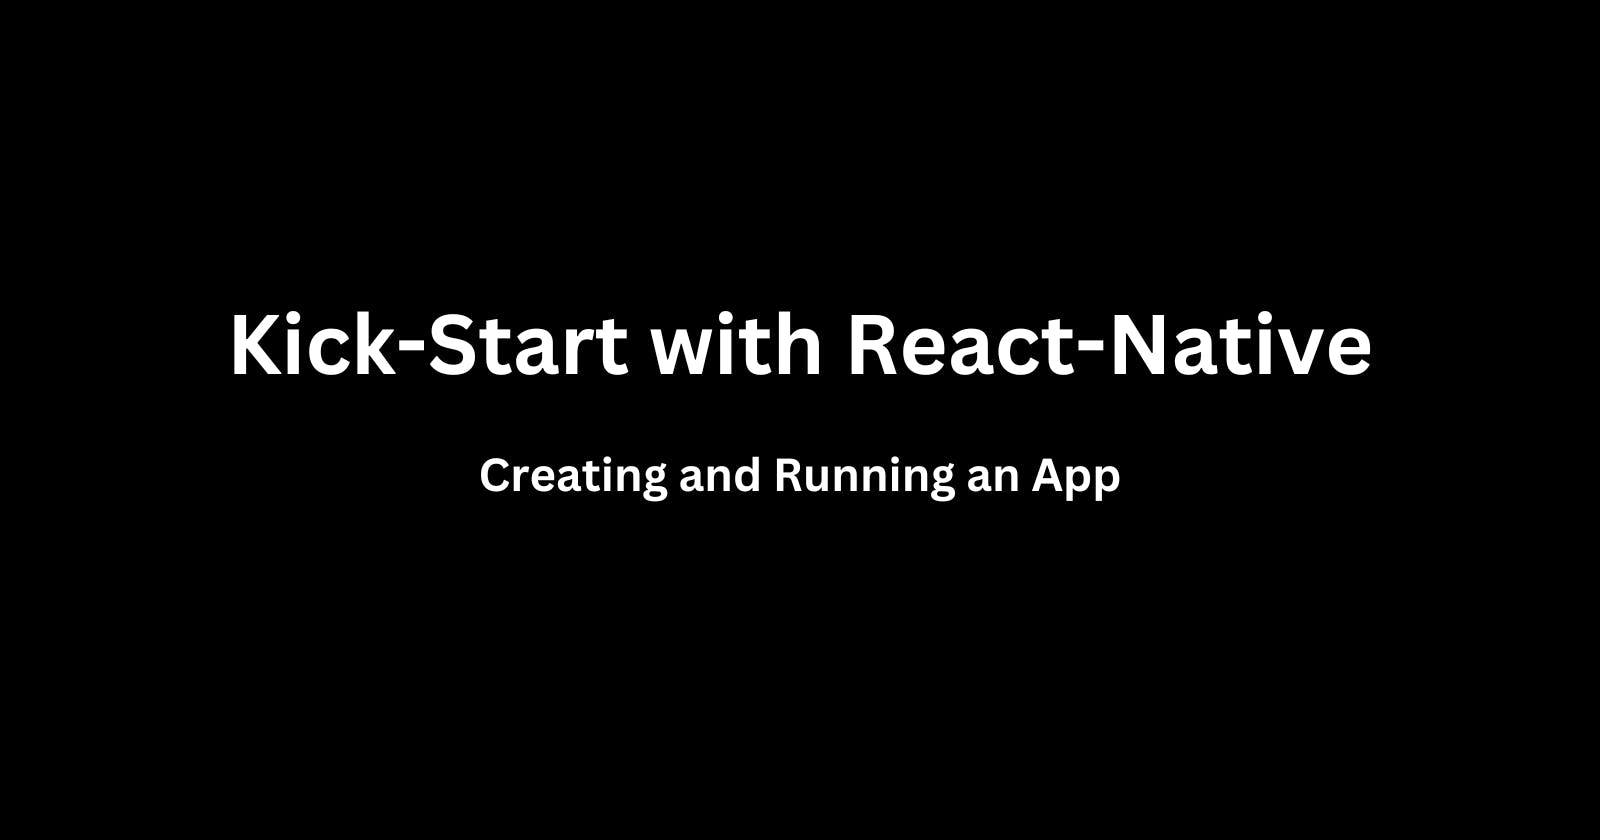 Kick-Start with React-Native